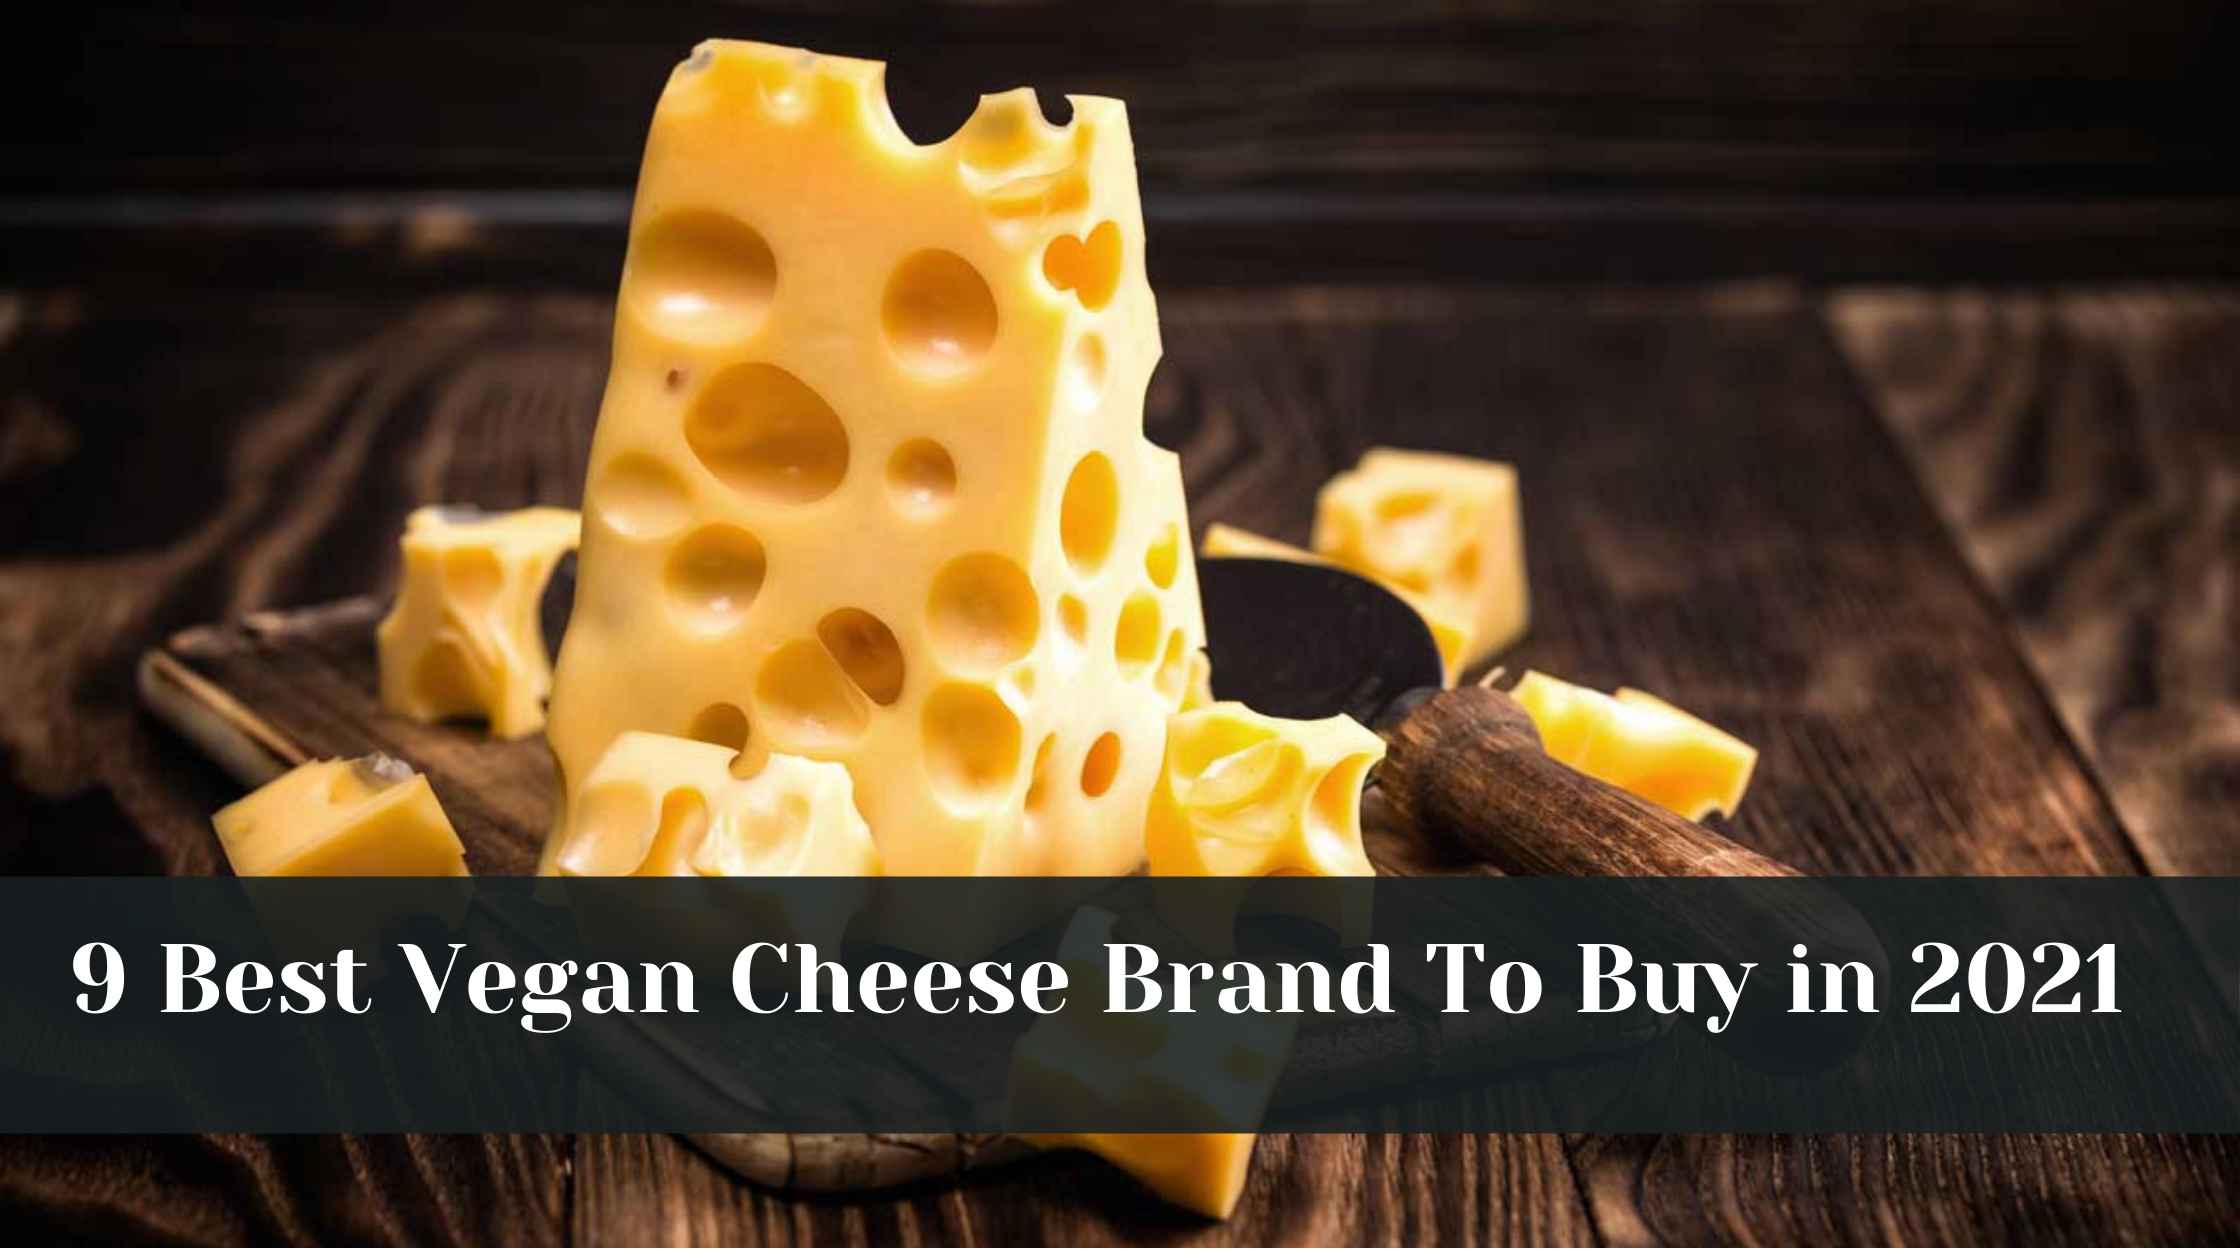 The 9 Best Vegan Cheese Brand To Buy in 2021